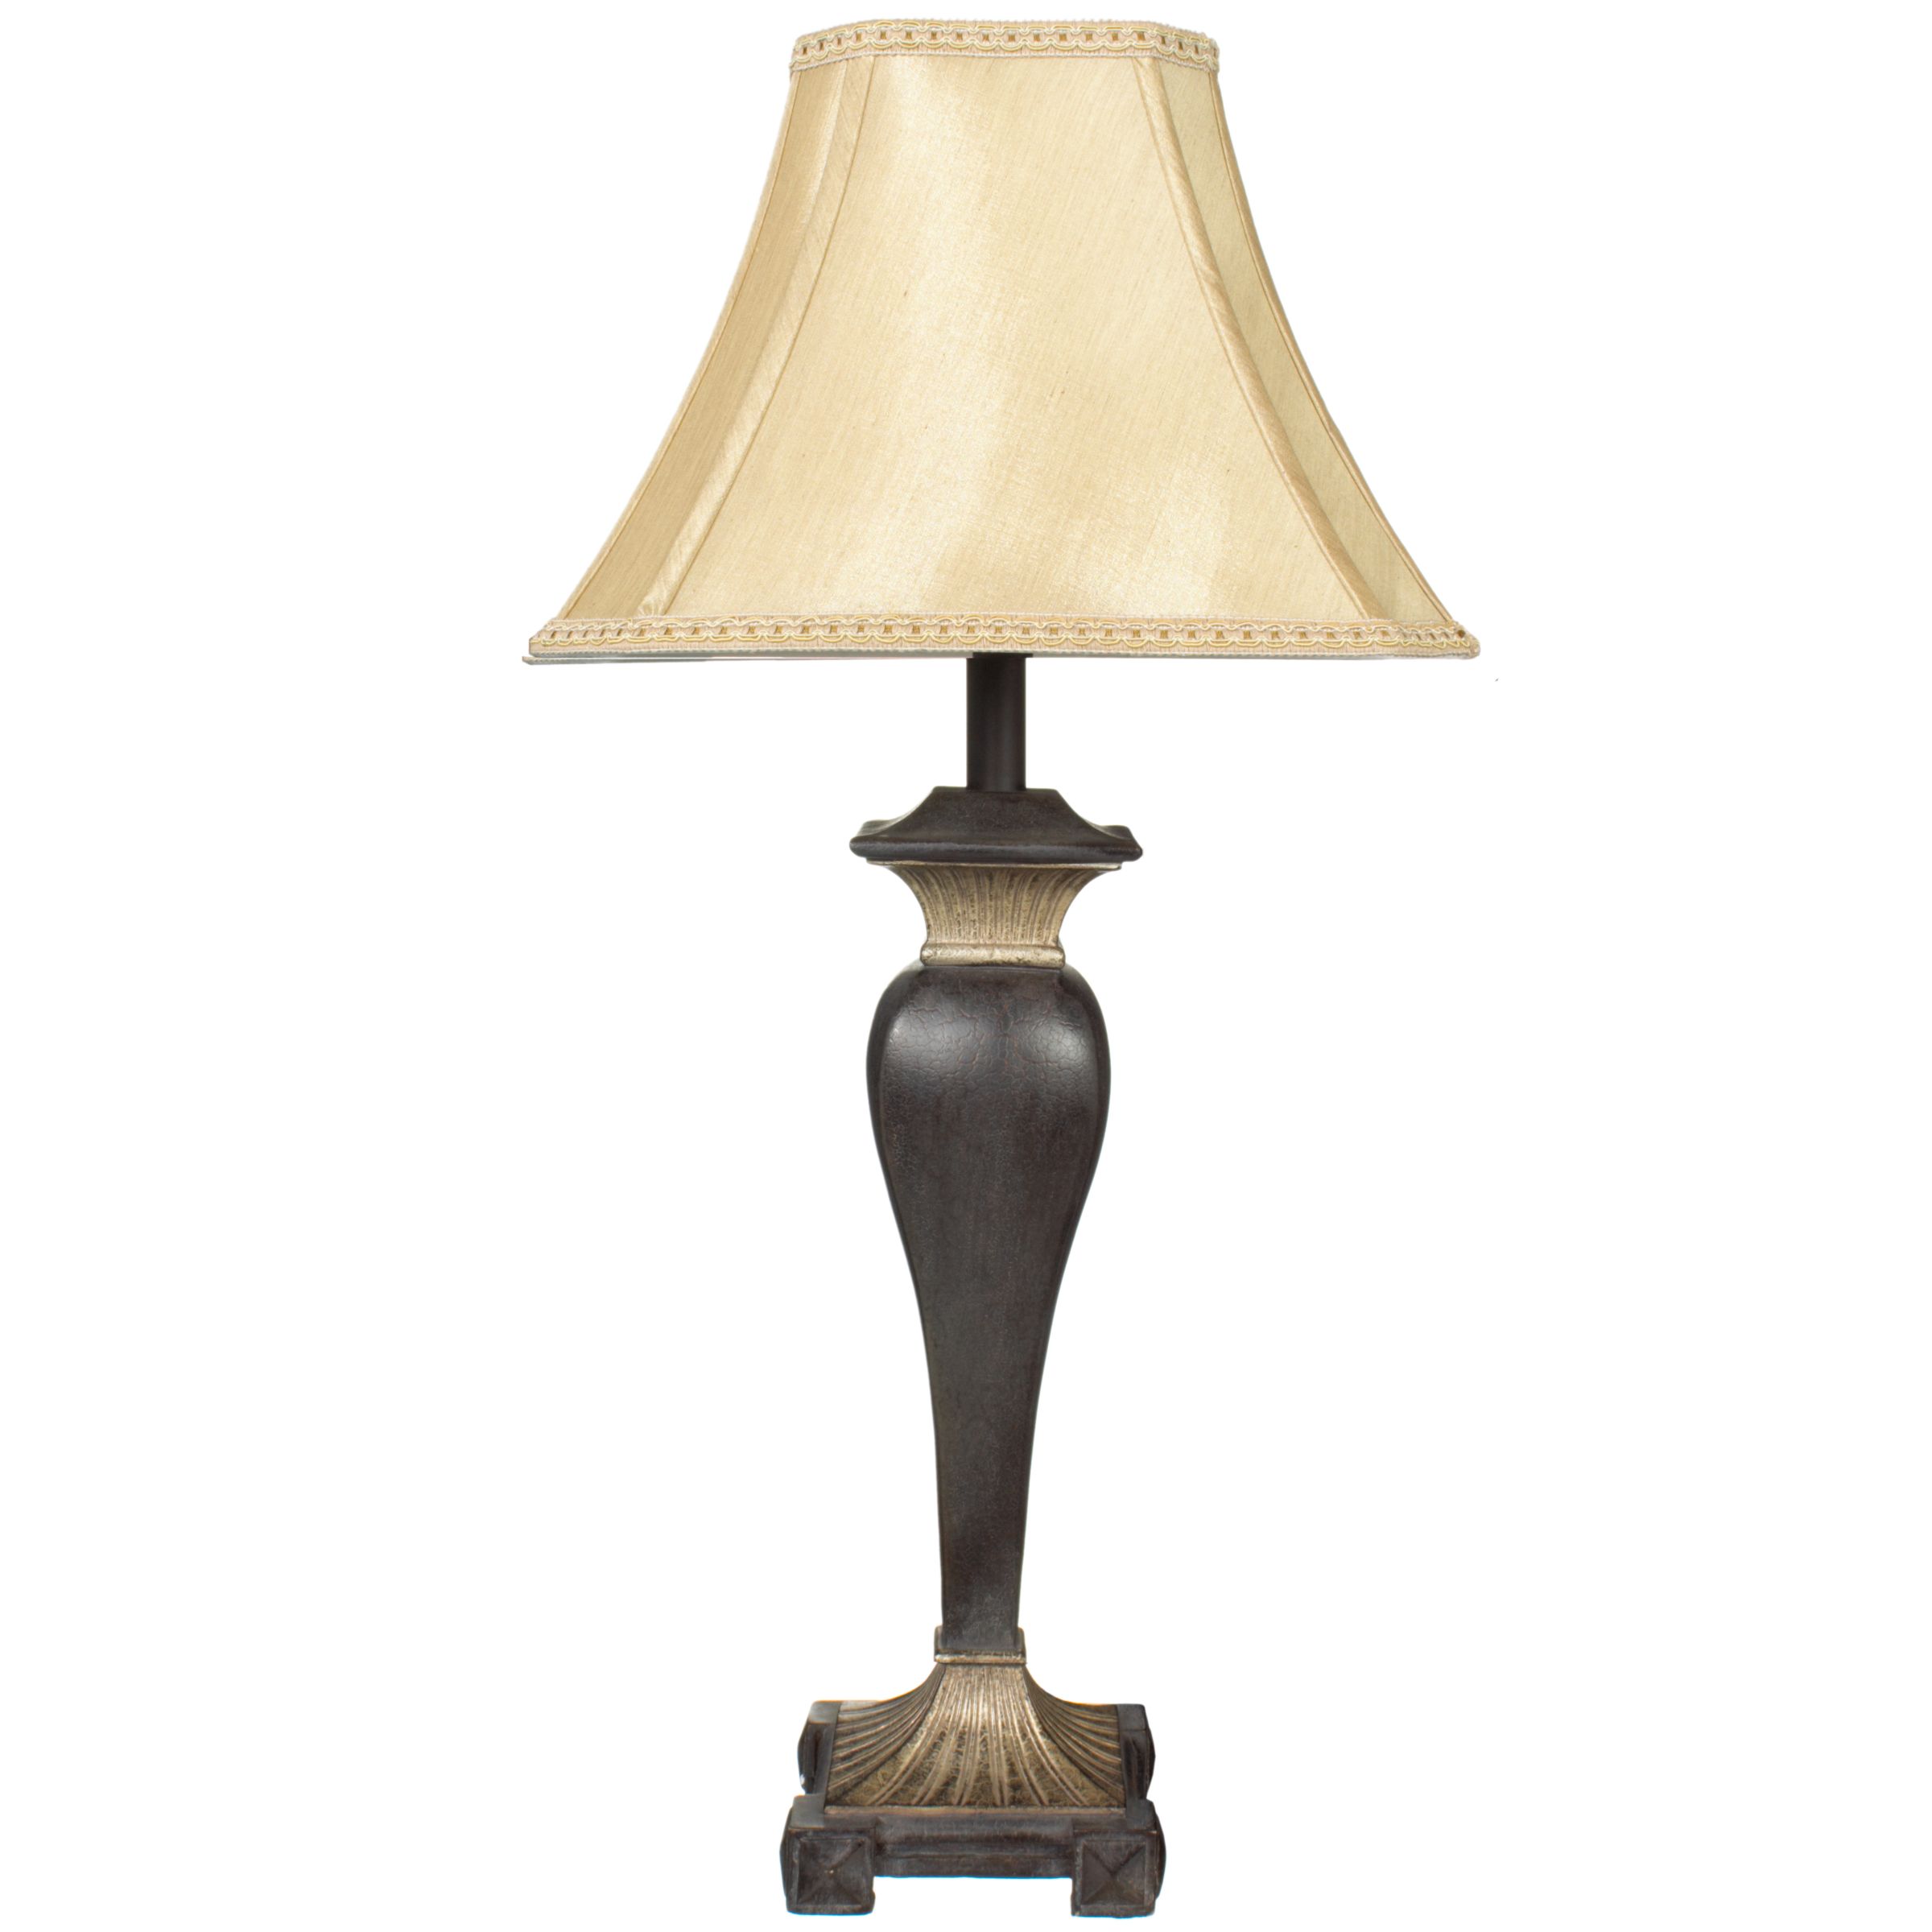 John Lewis Rhea Table Lamp and Shade